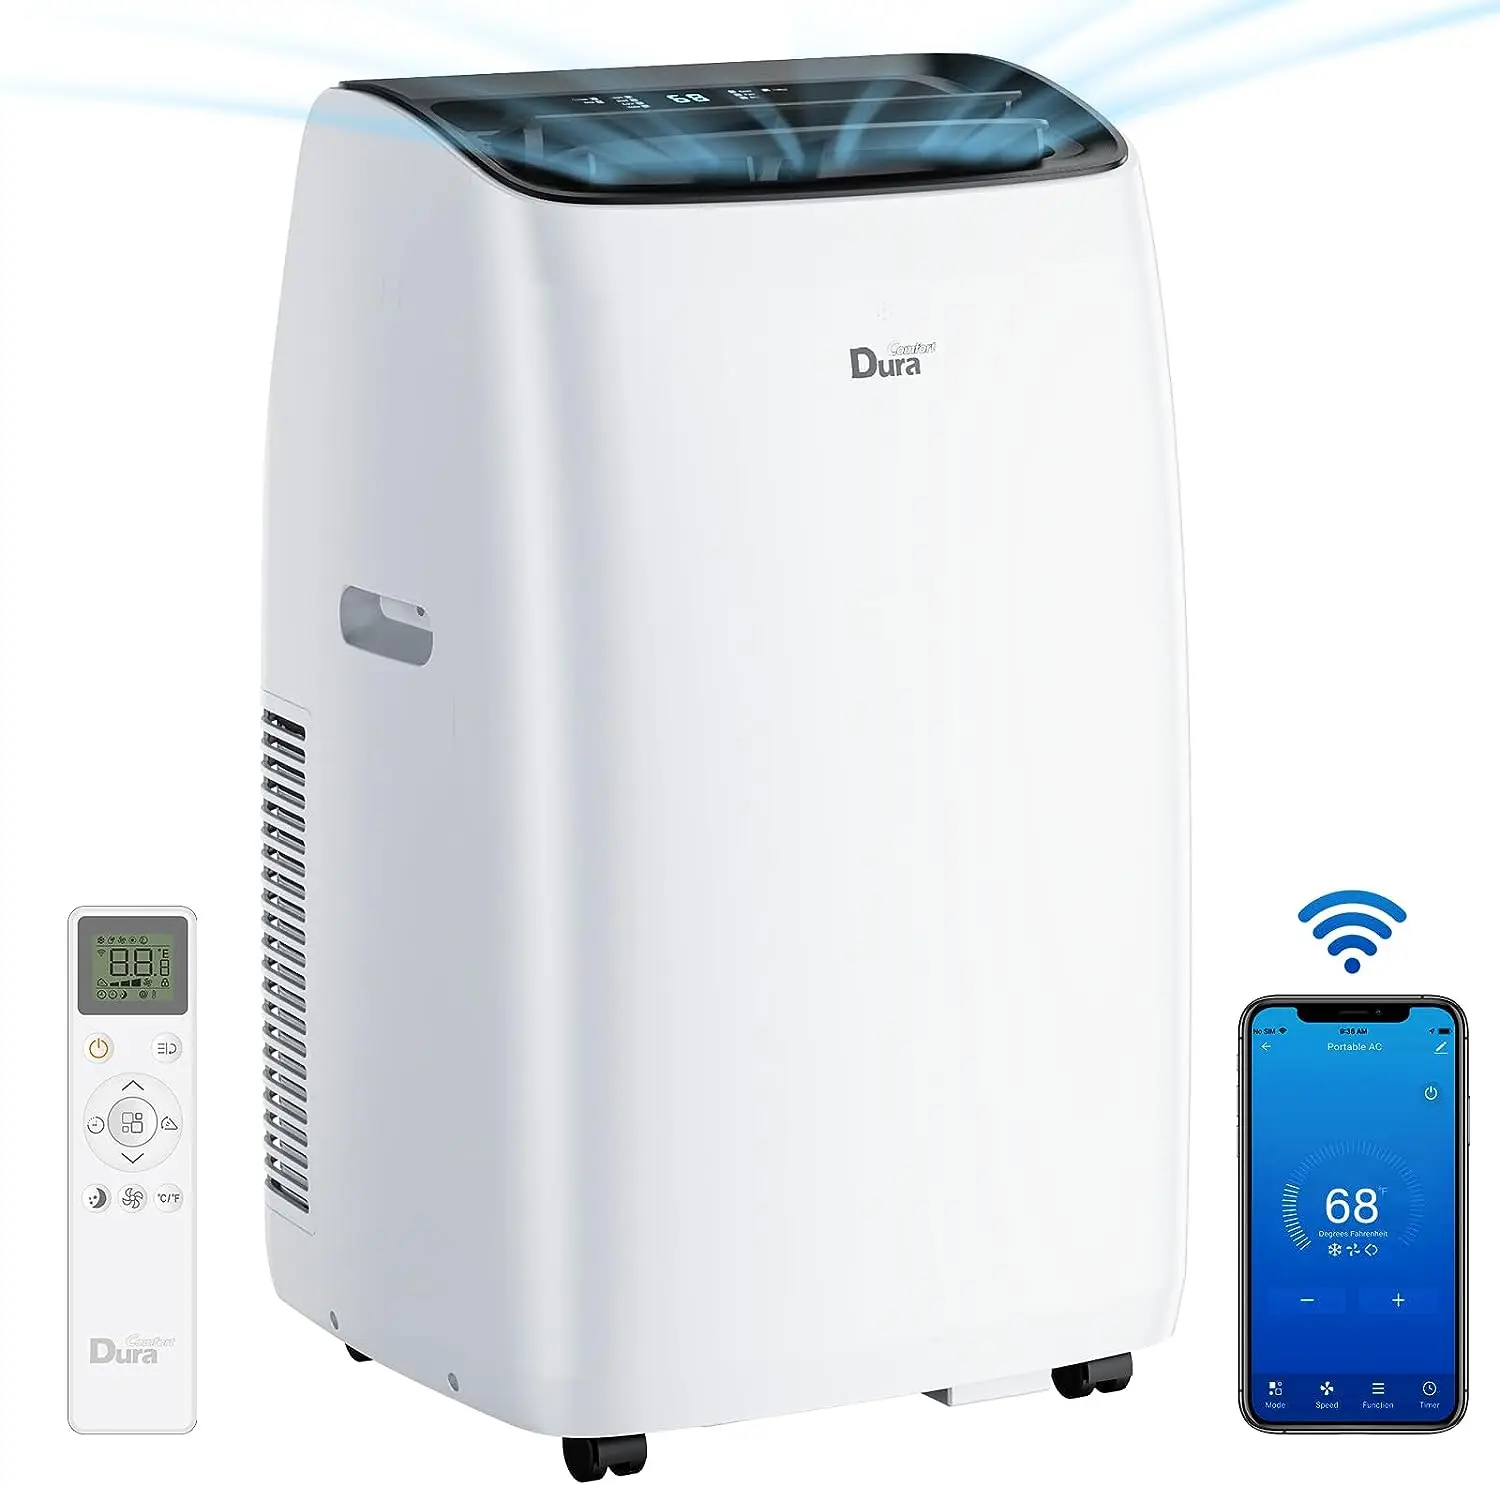 

Smart Portable Air Conditioners, 12000 BTU(Ashrae) /8150 BTU (SACC) Quiet AC Unit, Built-in Dehumidifier and Fan Modes, Mobile A